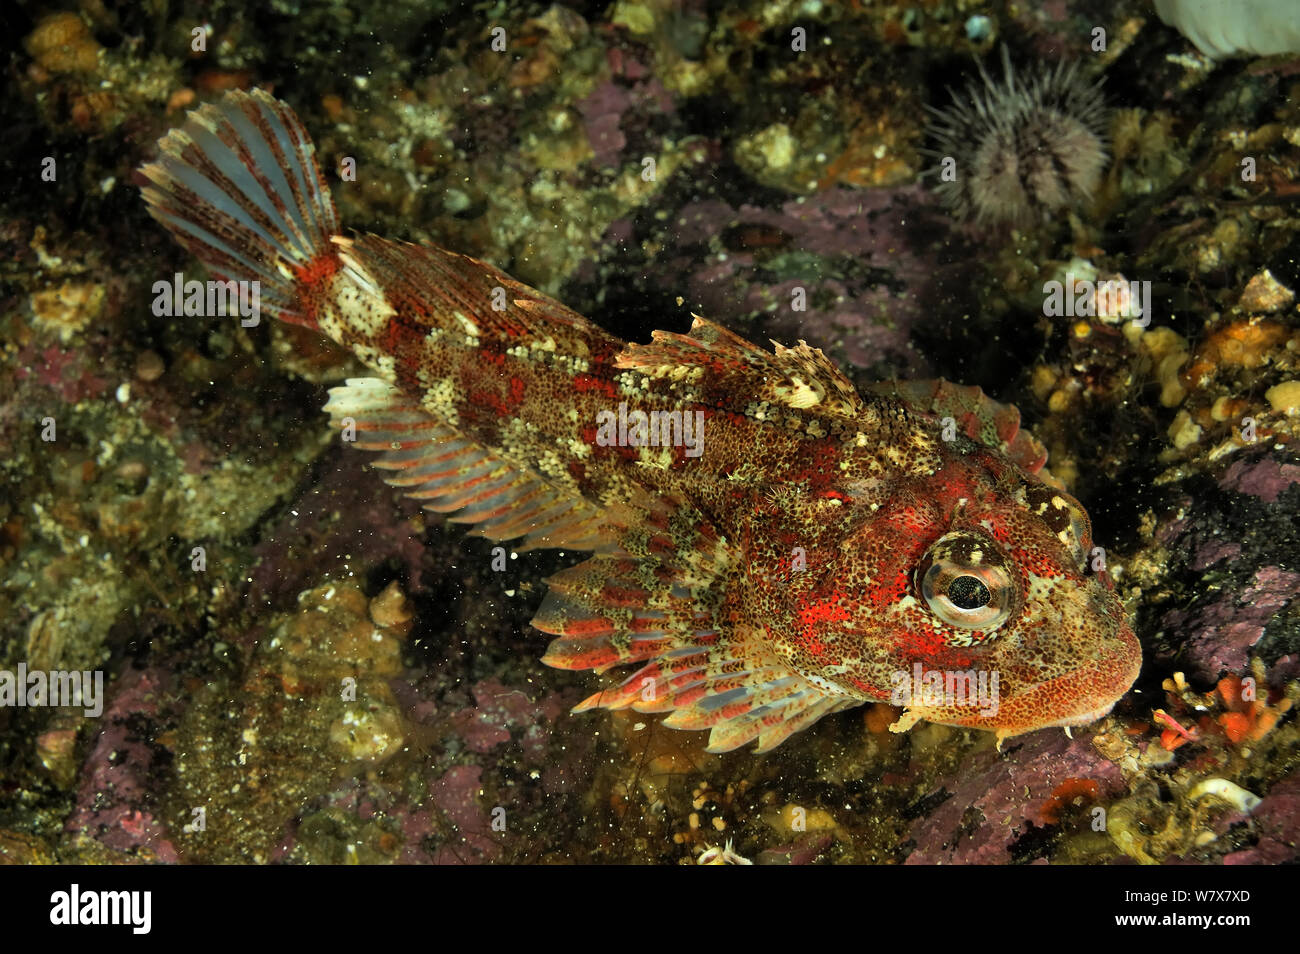 Red Irish lord (Hemilepidotus hemilepidotus), Alaska, USA, Gulf of Alaska. Pacific ocean. Stock Photo